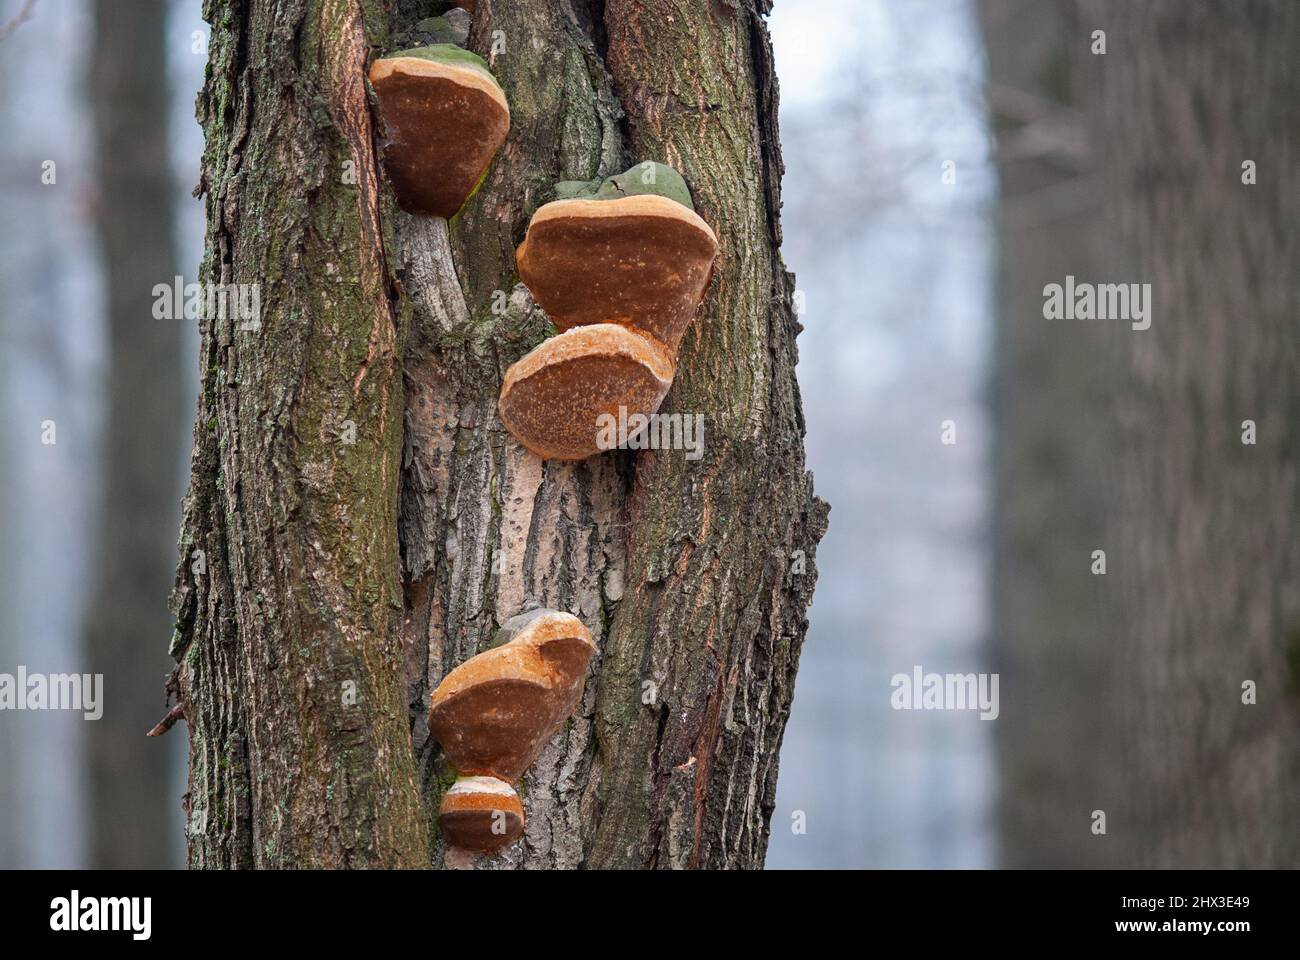 Shelf Fungus growing on tree trunk Stock Photo